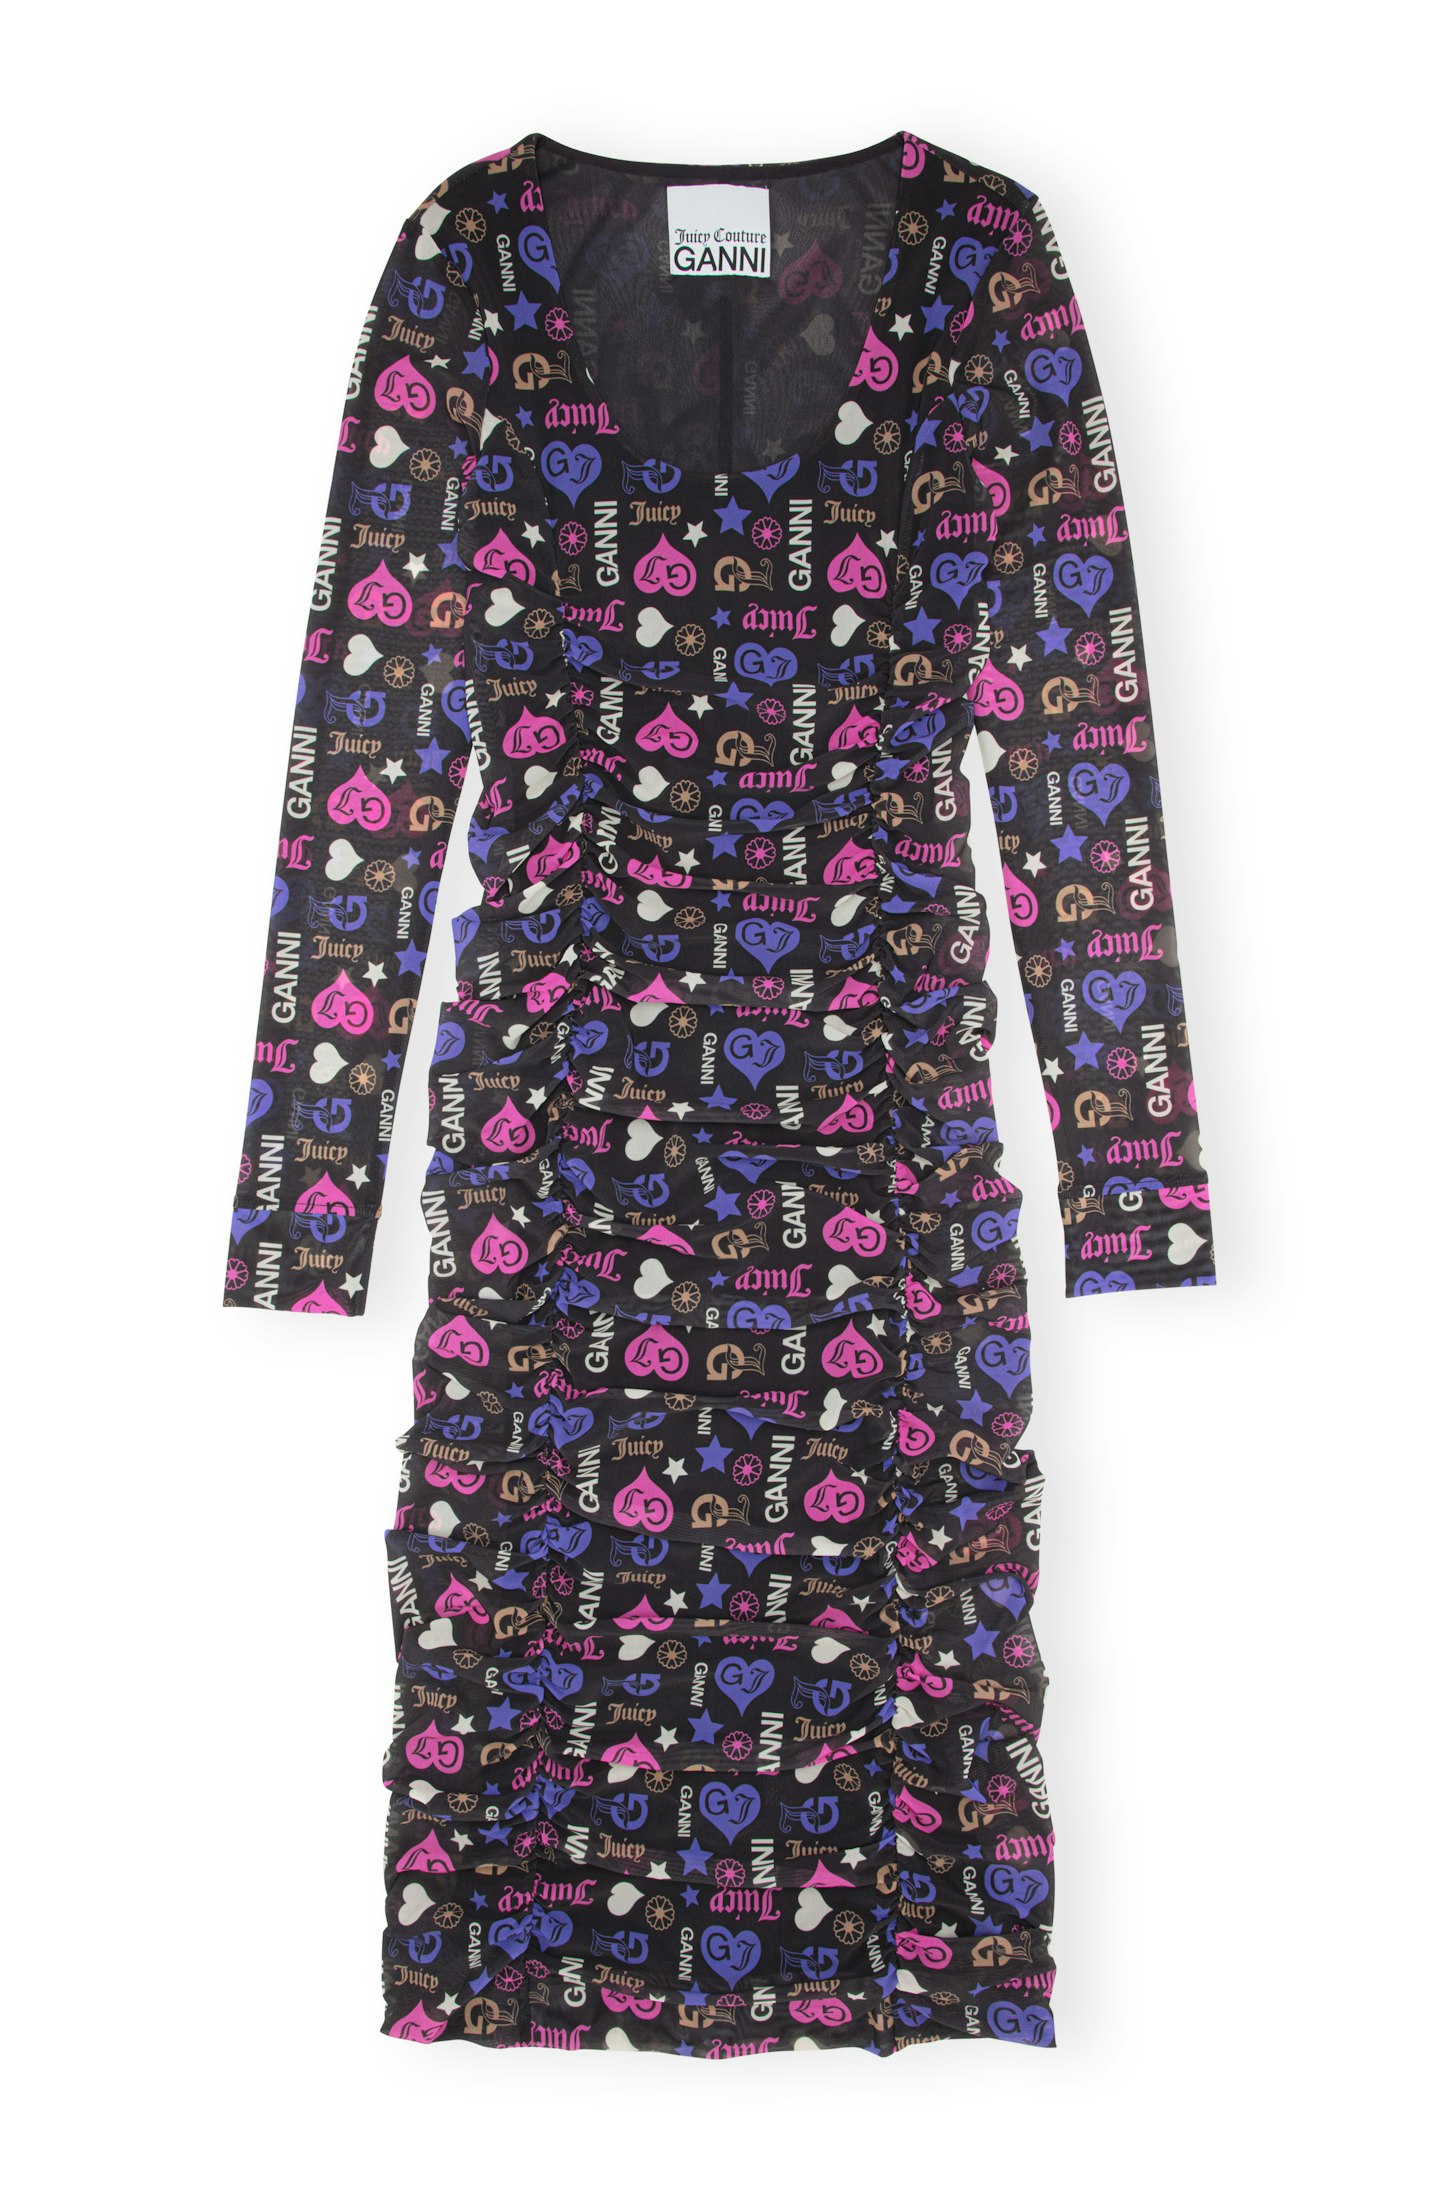 GANNI x Juicy Couture Printed Mesh Gathered Panel U-Neck Dress, £275